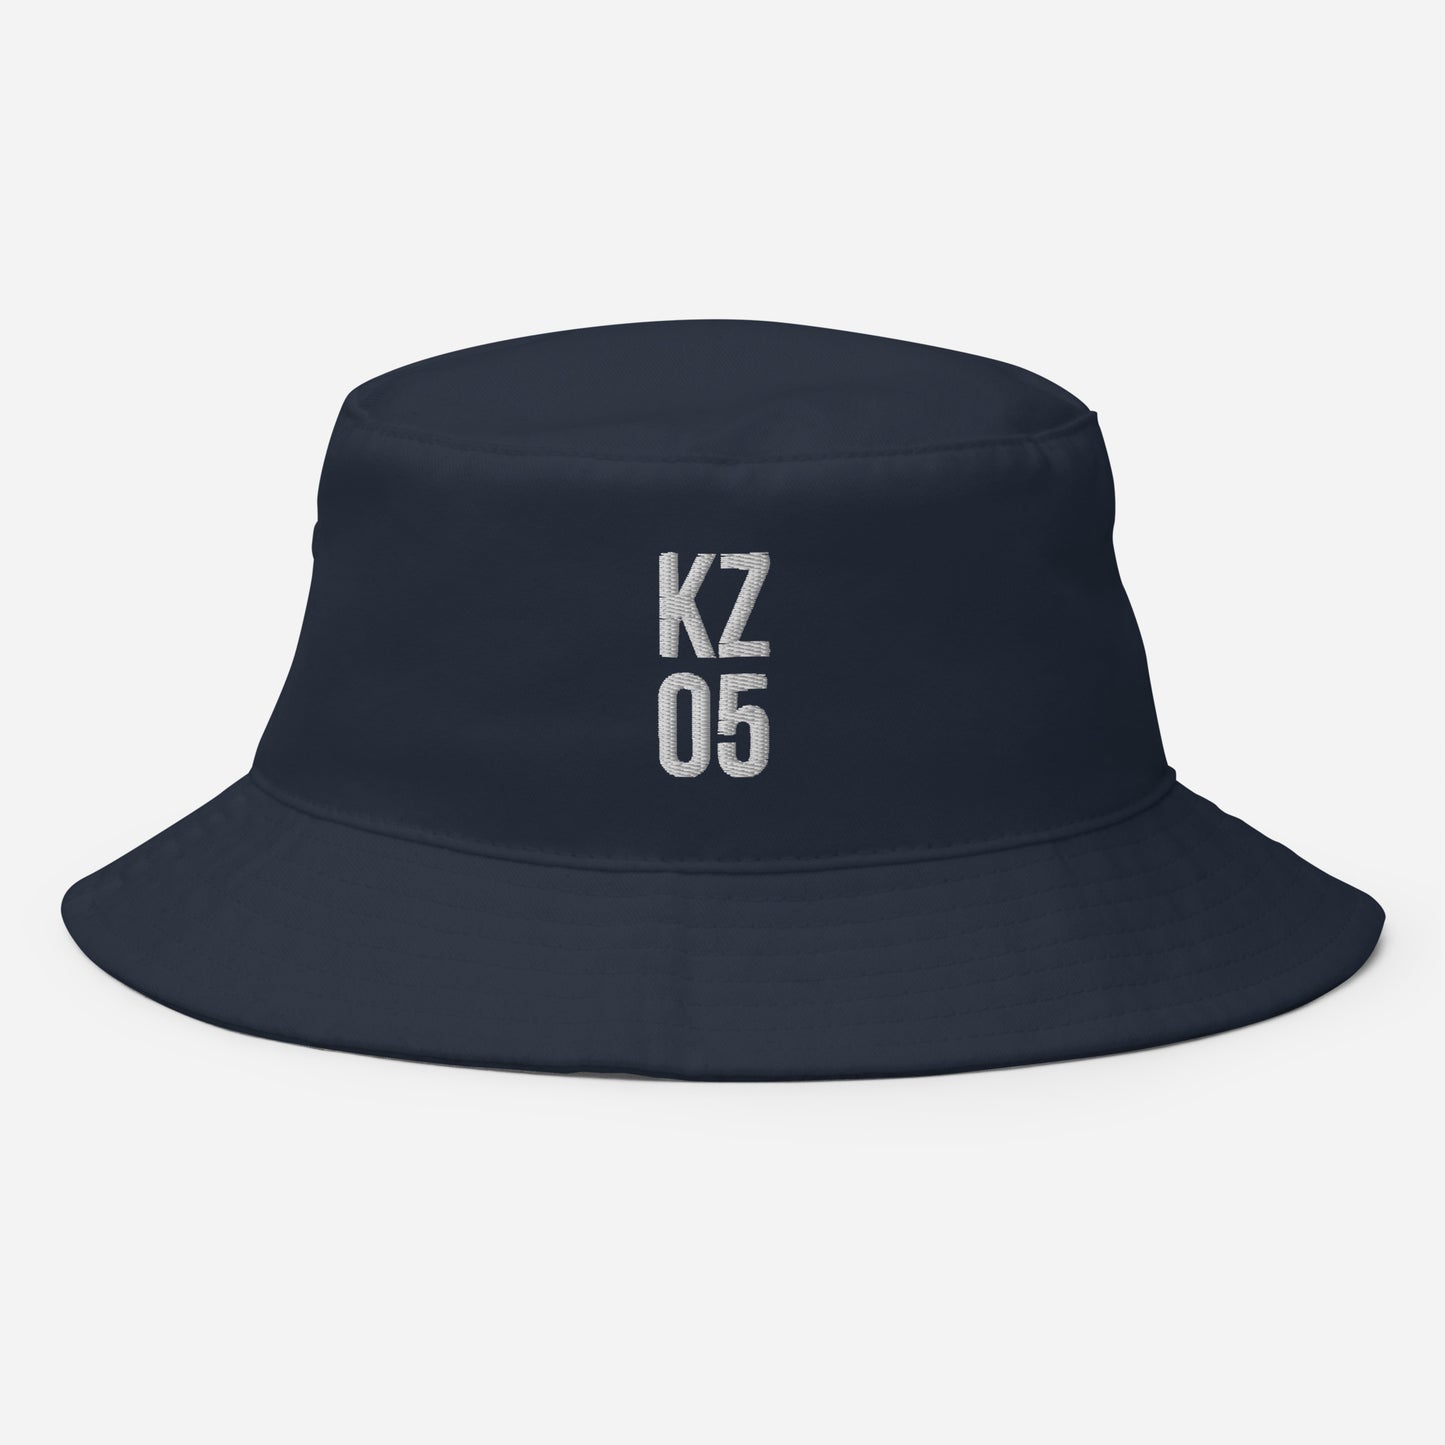 KZ 05 Bucket Hat